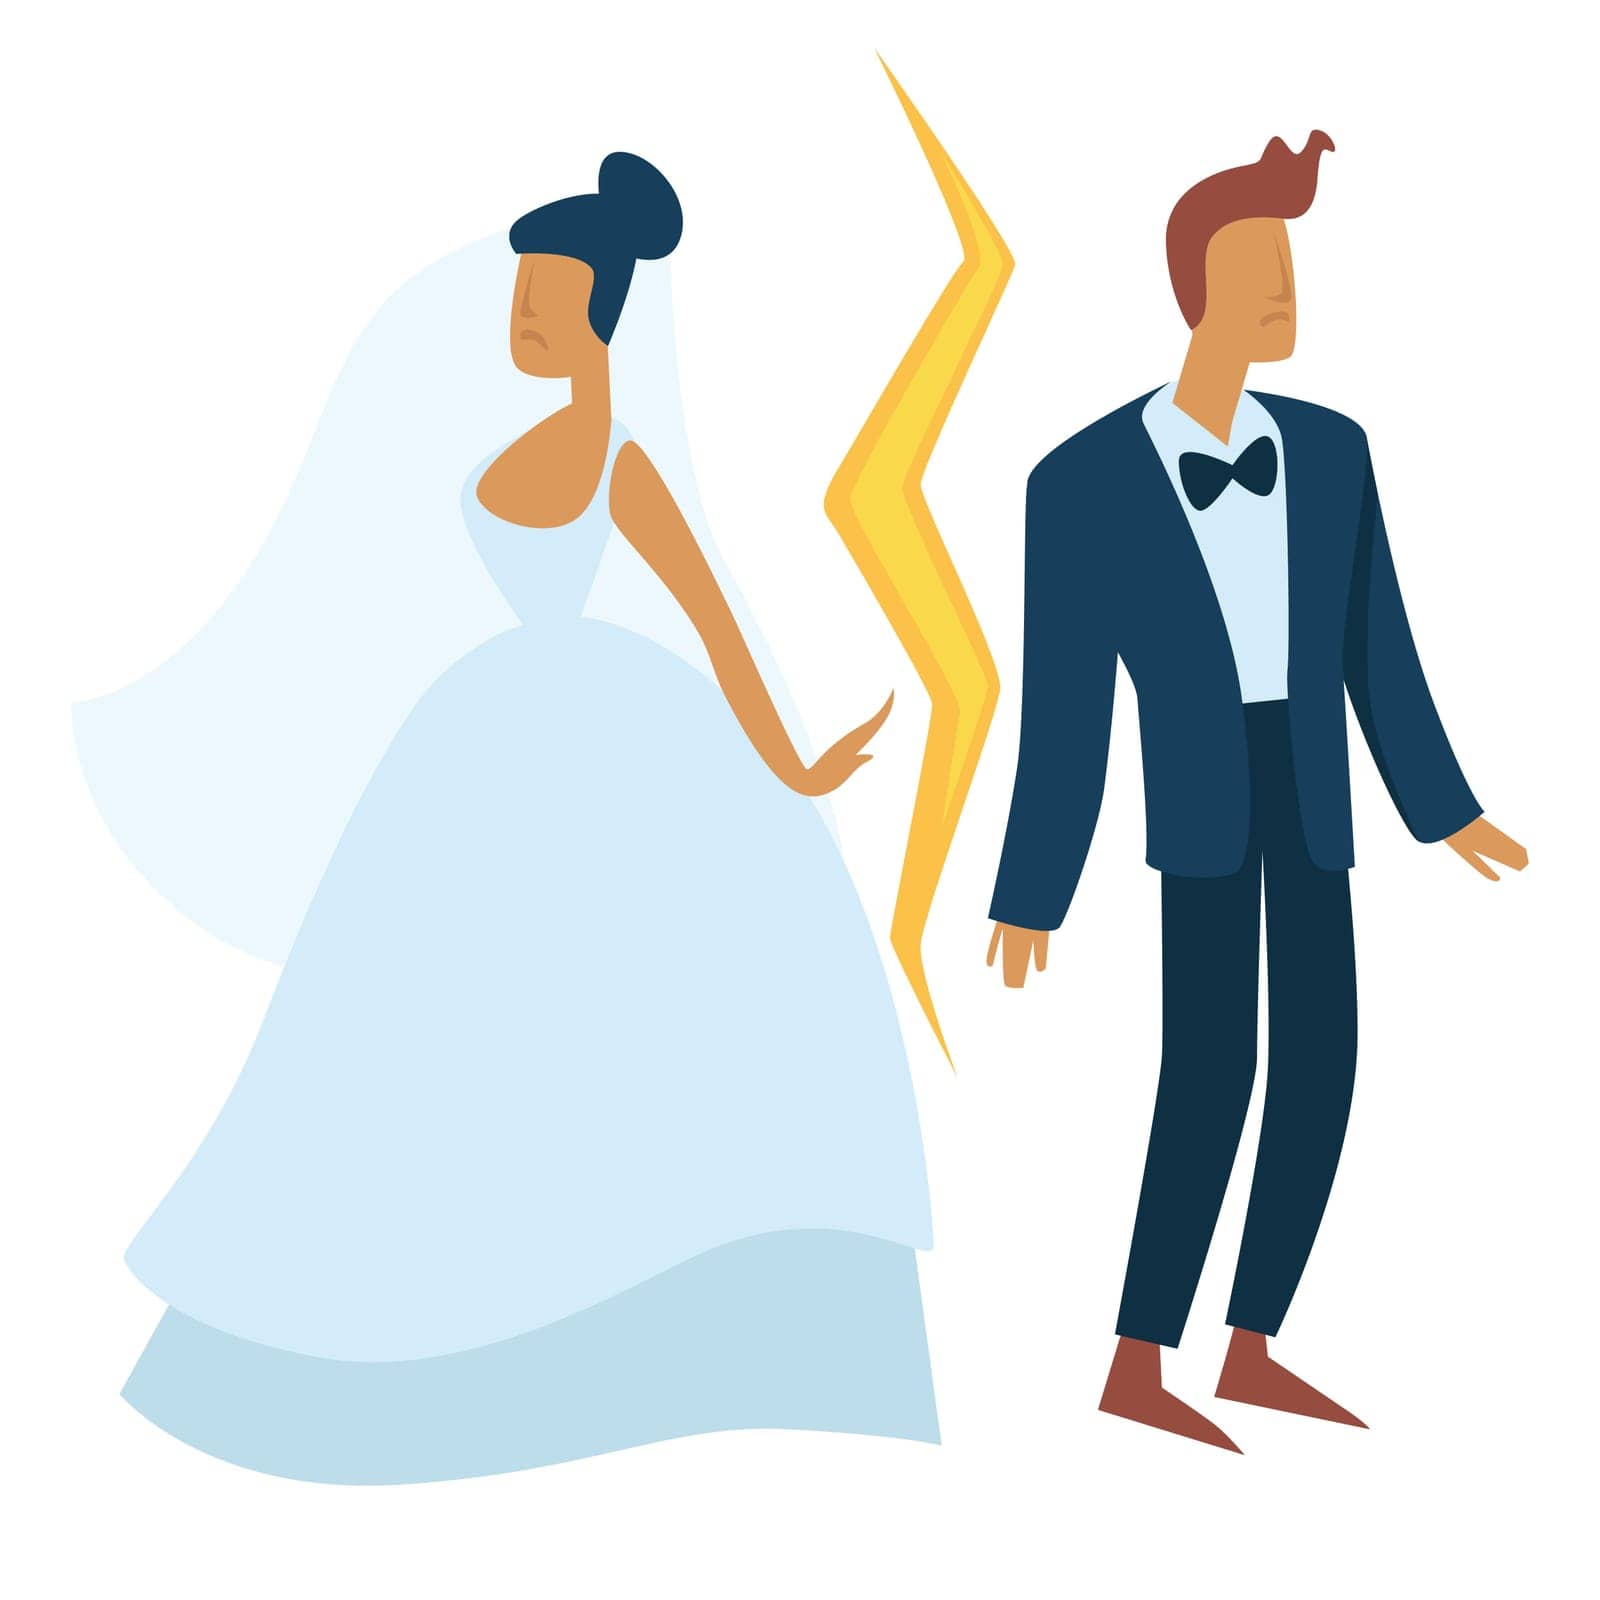 Divorce and family separation bride and groom wedding breakdown by Sonulkaster